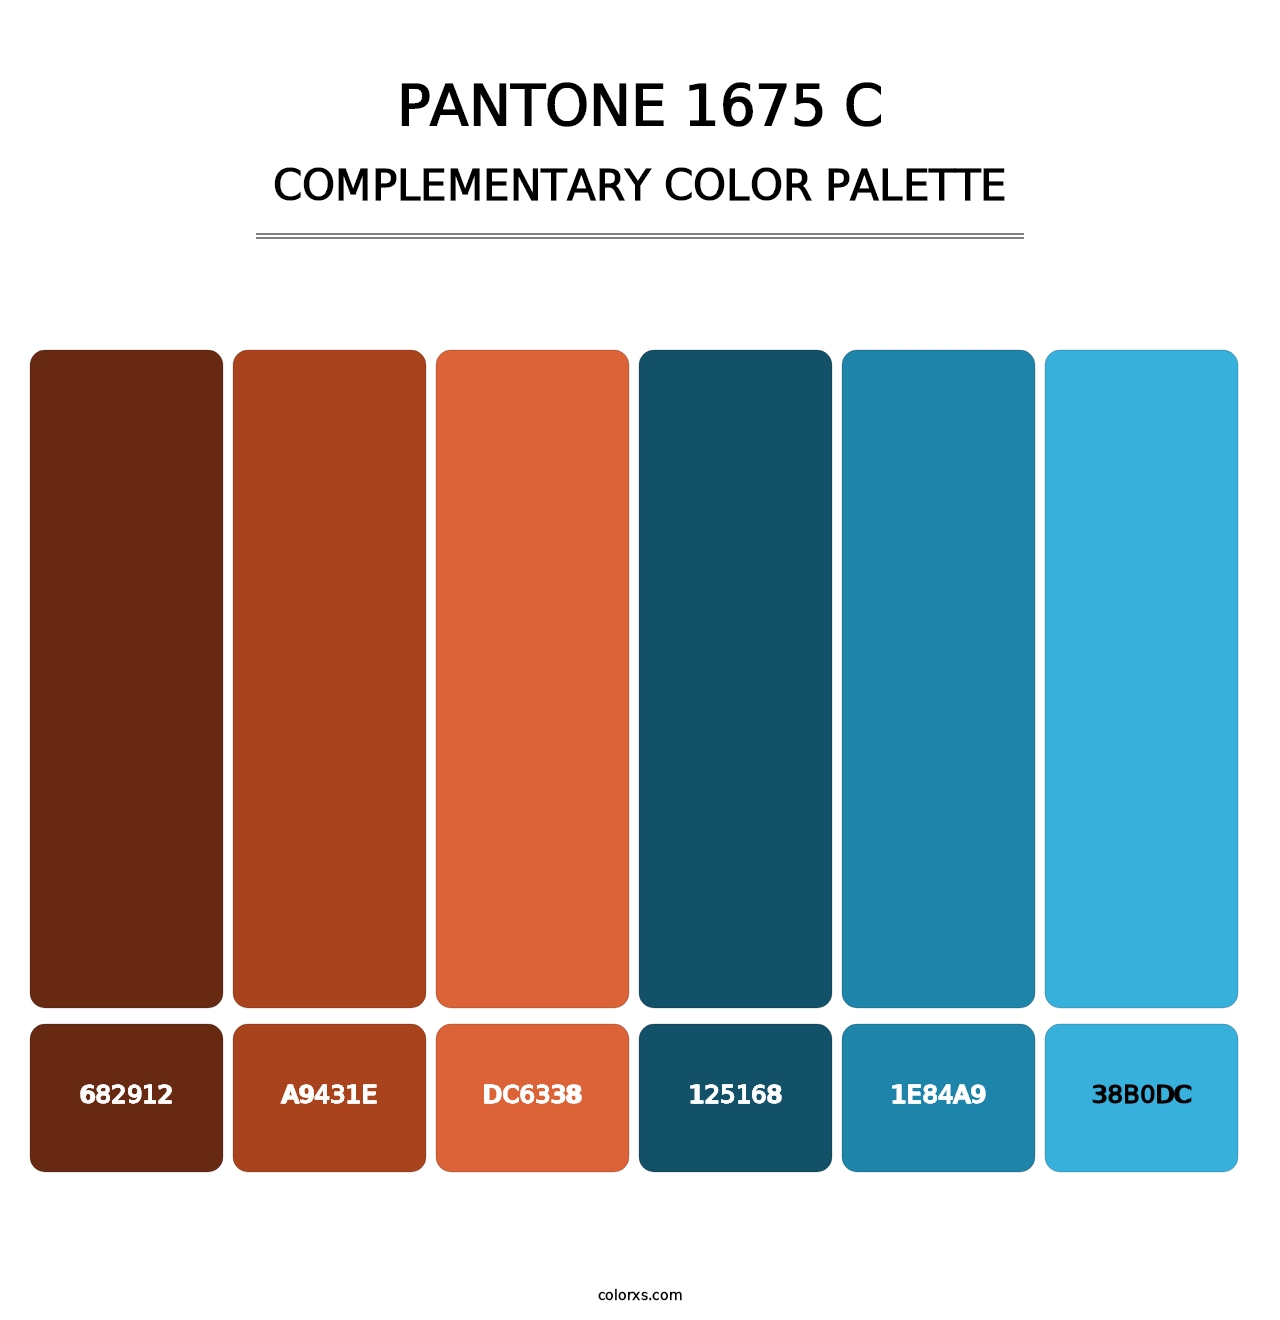 PANTONE 1675 C - Complementary Color Palette